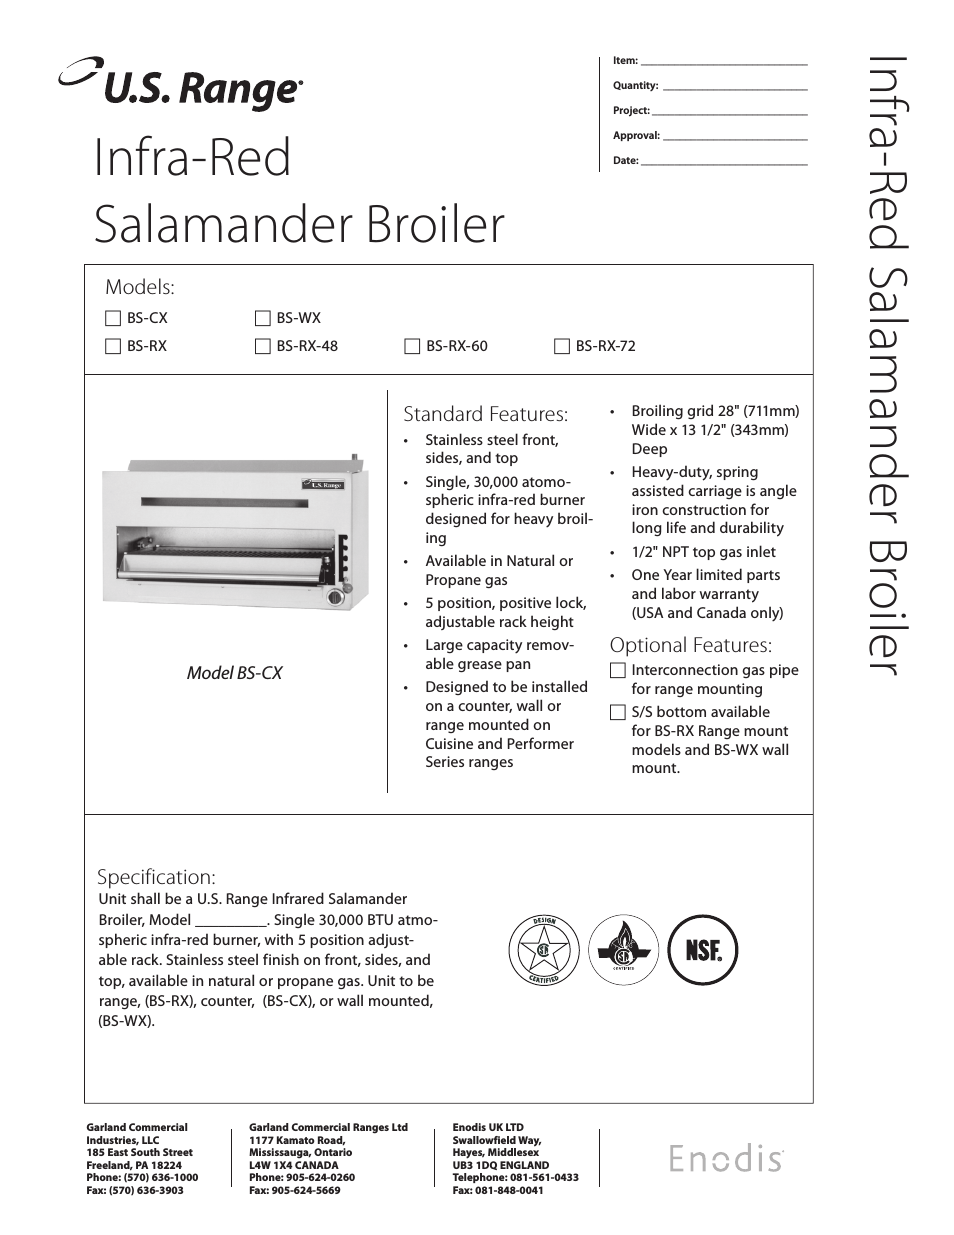 Infra-Red Salamander Broiler BS-RX